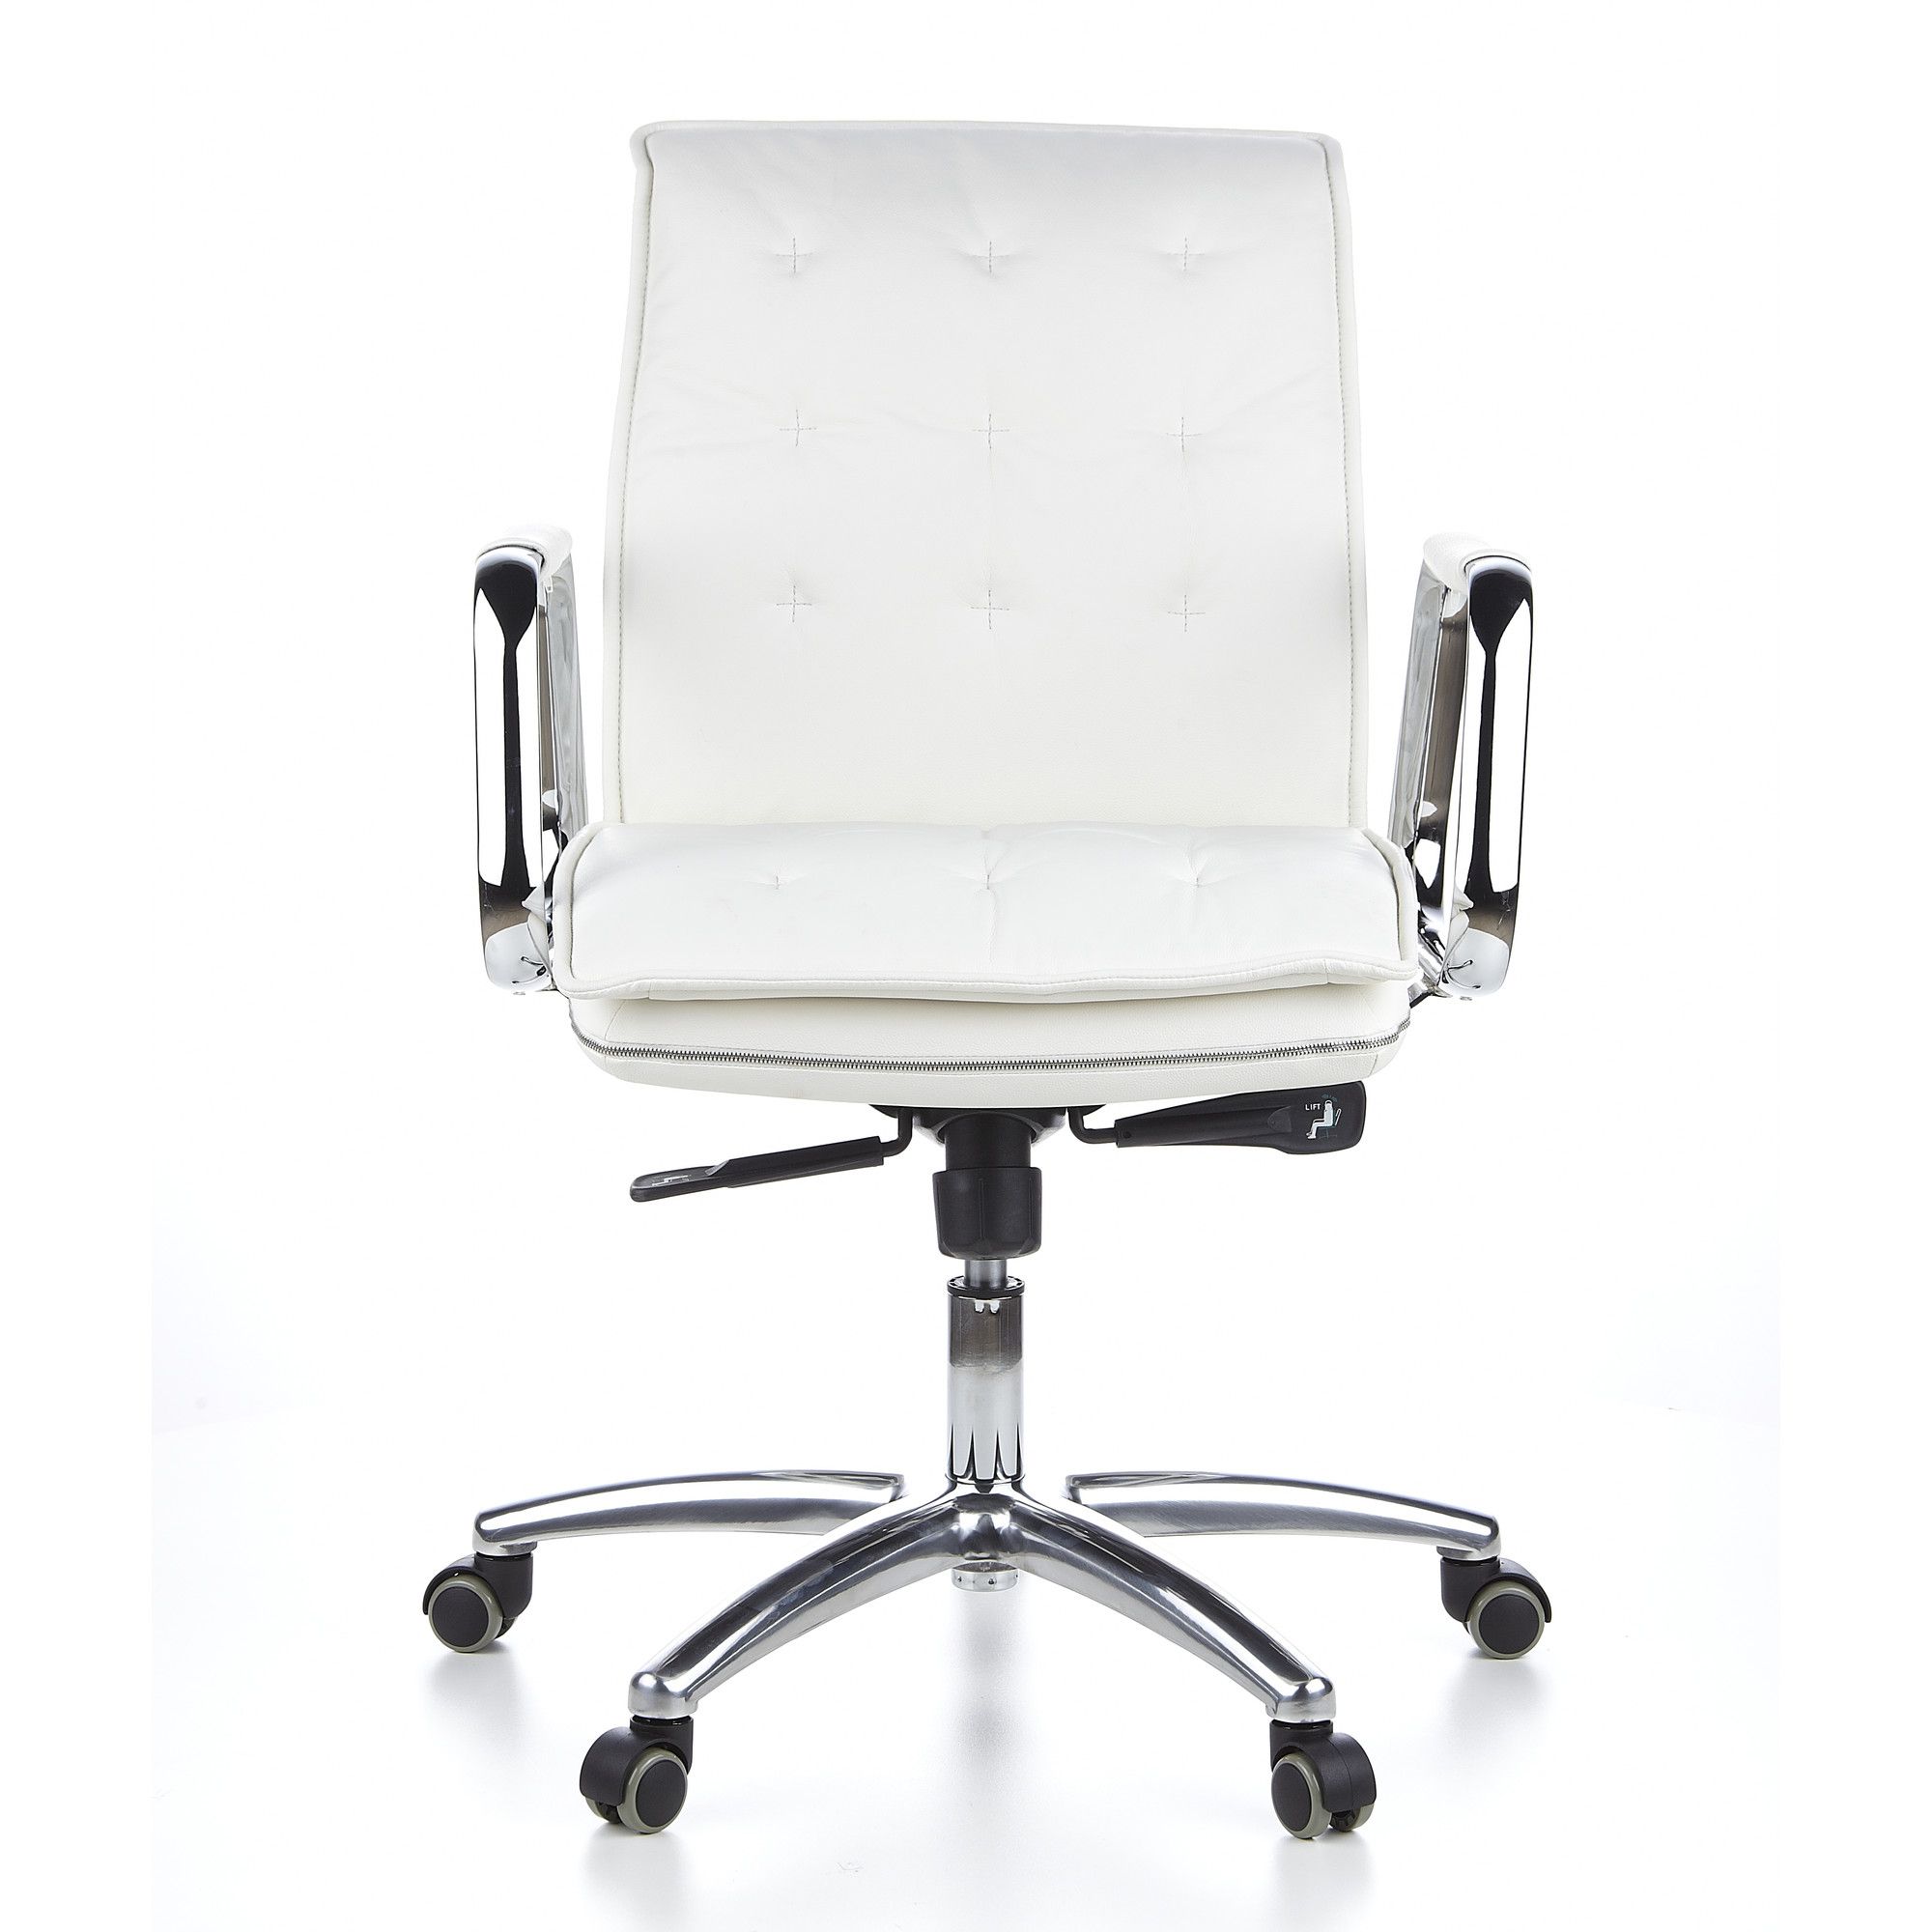 fauteuil de bureau villa 10 - hjh office - cuir nappa ivoire - mécanisme synchrone - accoudoirs